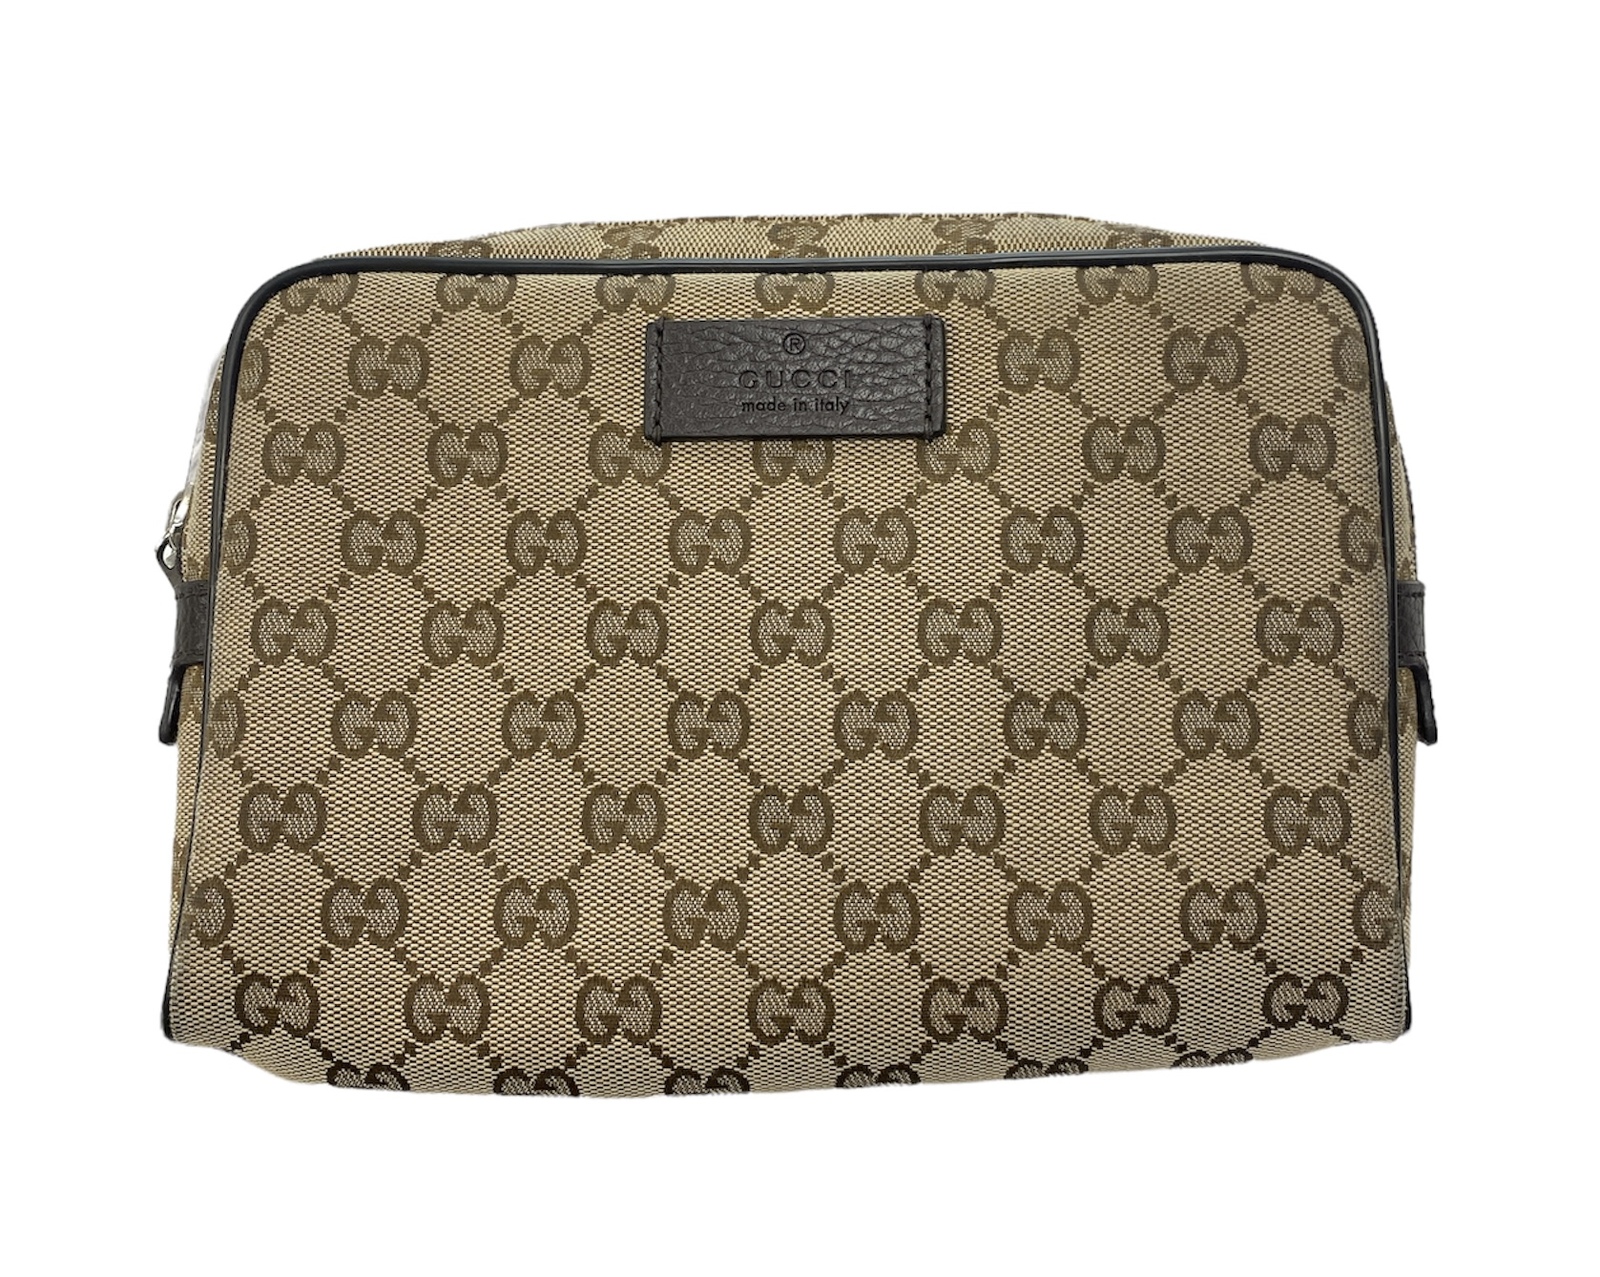 Gucci Travel Bag 449174 345921 - $599.00